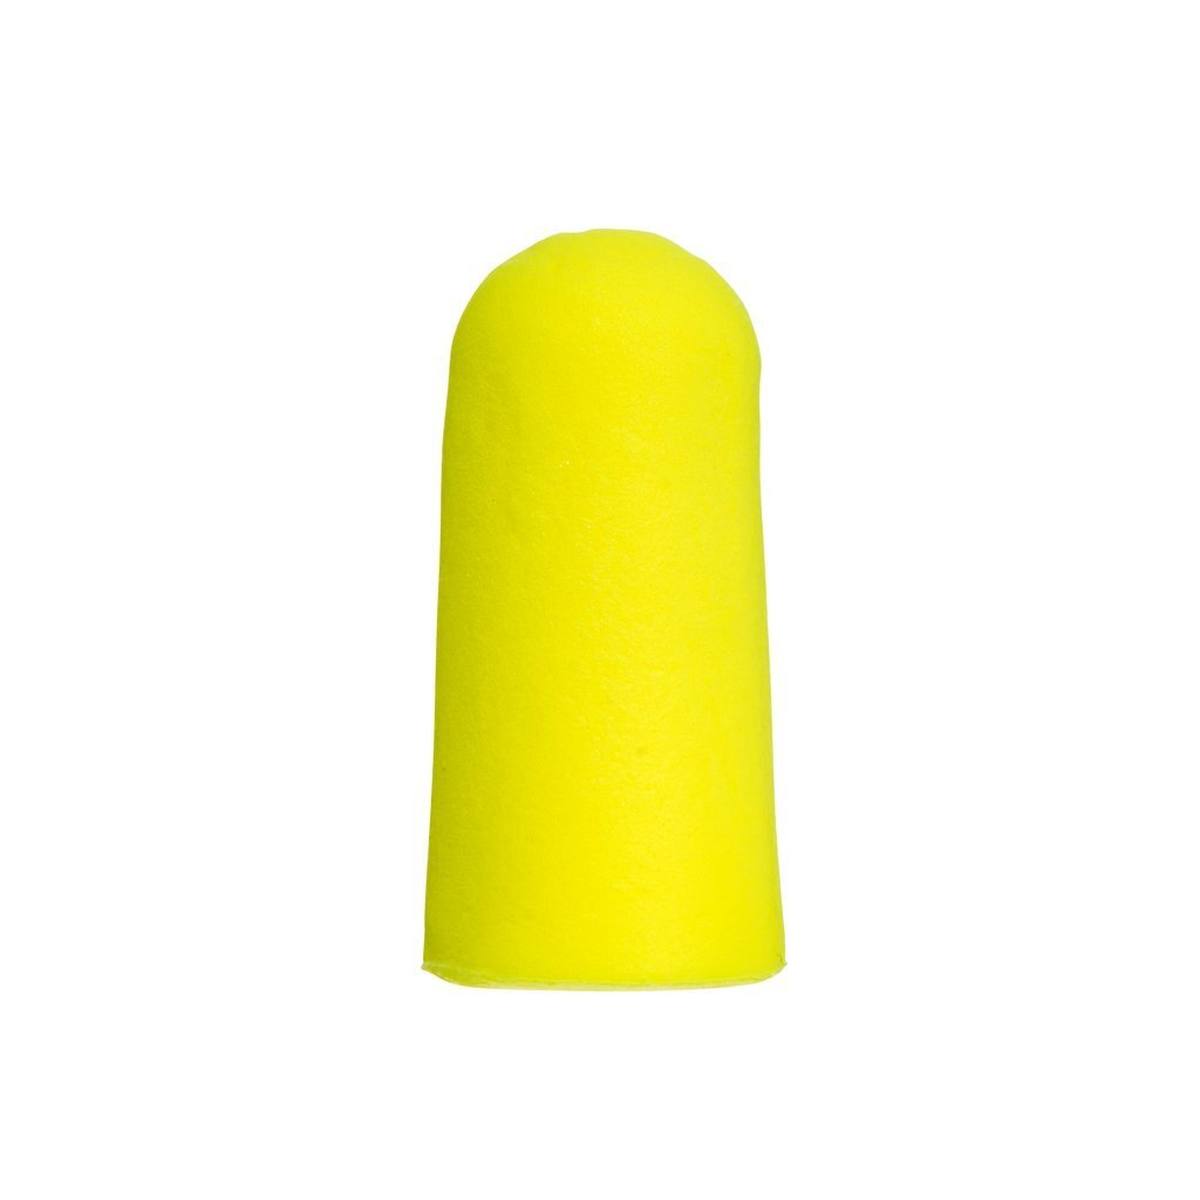 3M E-A-R Soft Yellow Neons, Polyurethan, flexibel und komfortabel, paarweise in Polybeutel, neongelb, SNR = 36 dB, ES01001